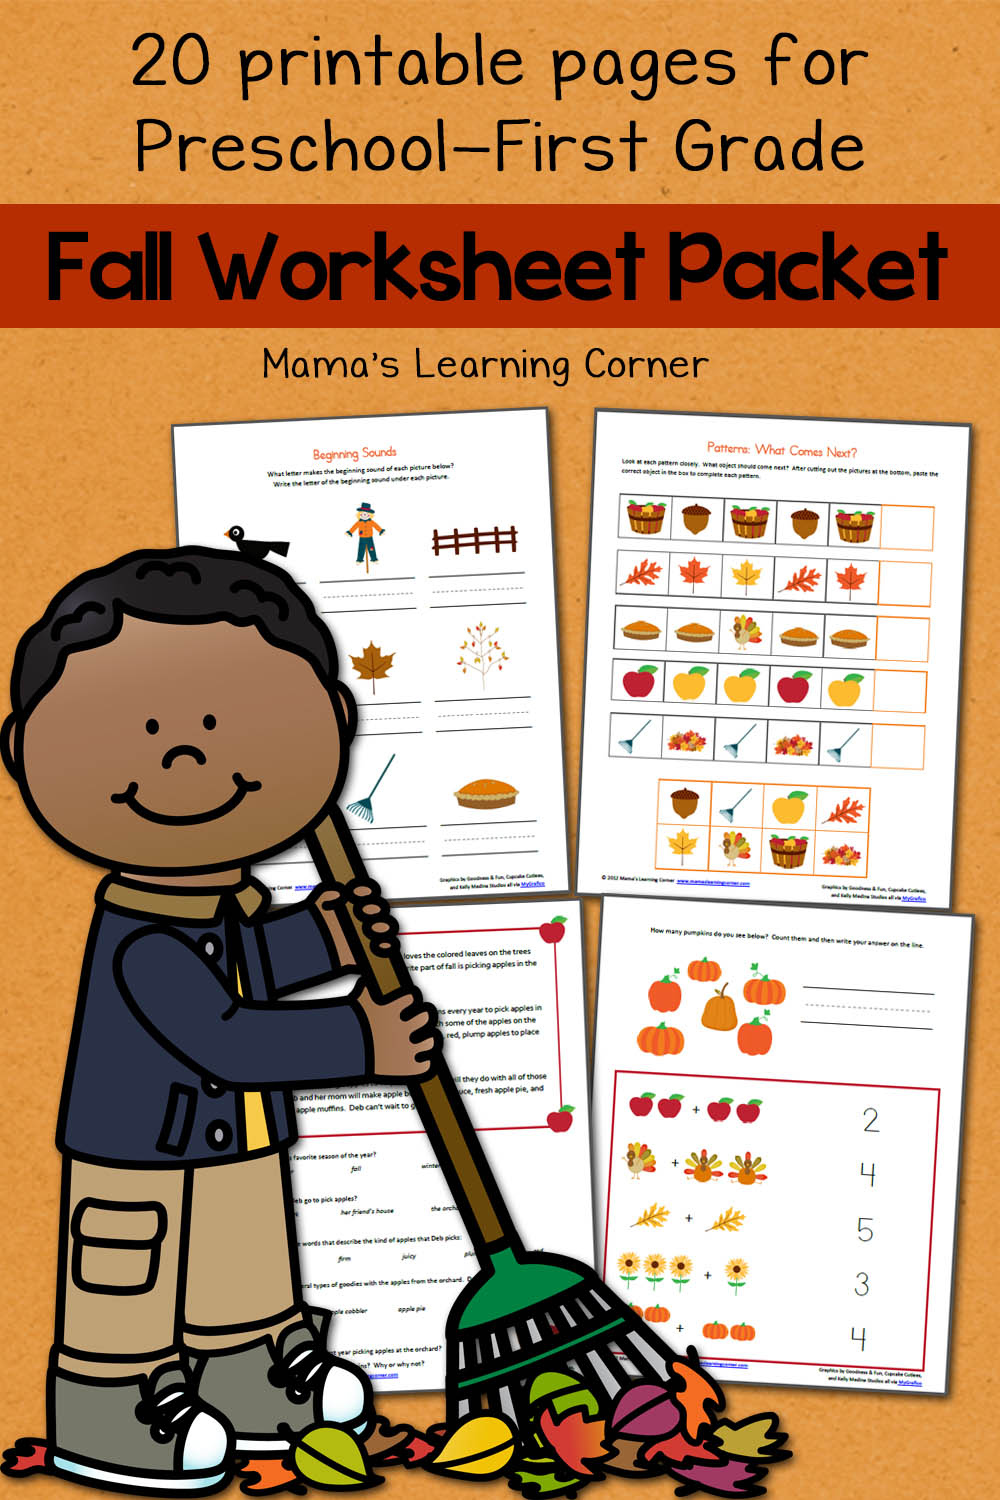 Fall Worksheet Packet For Preschool First Grade Mamas Learning Corner